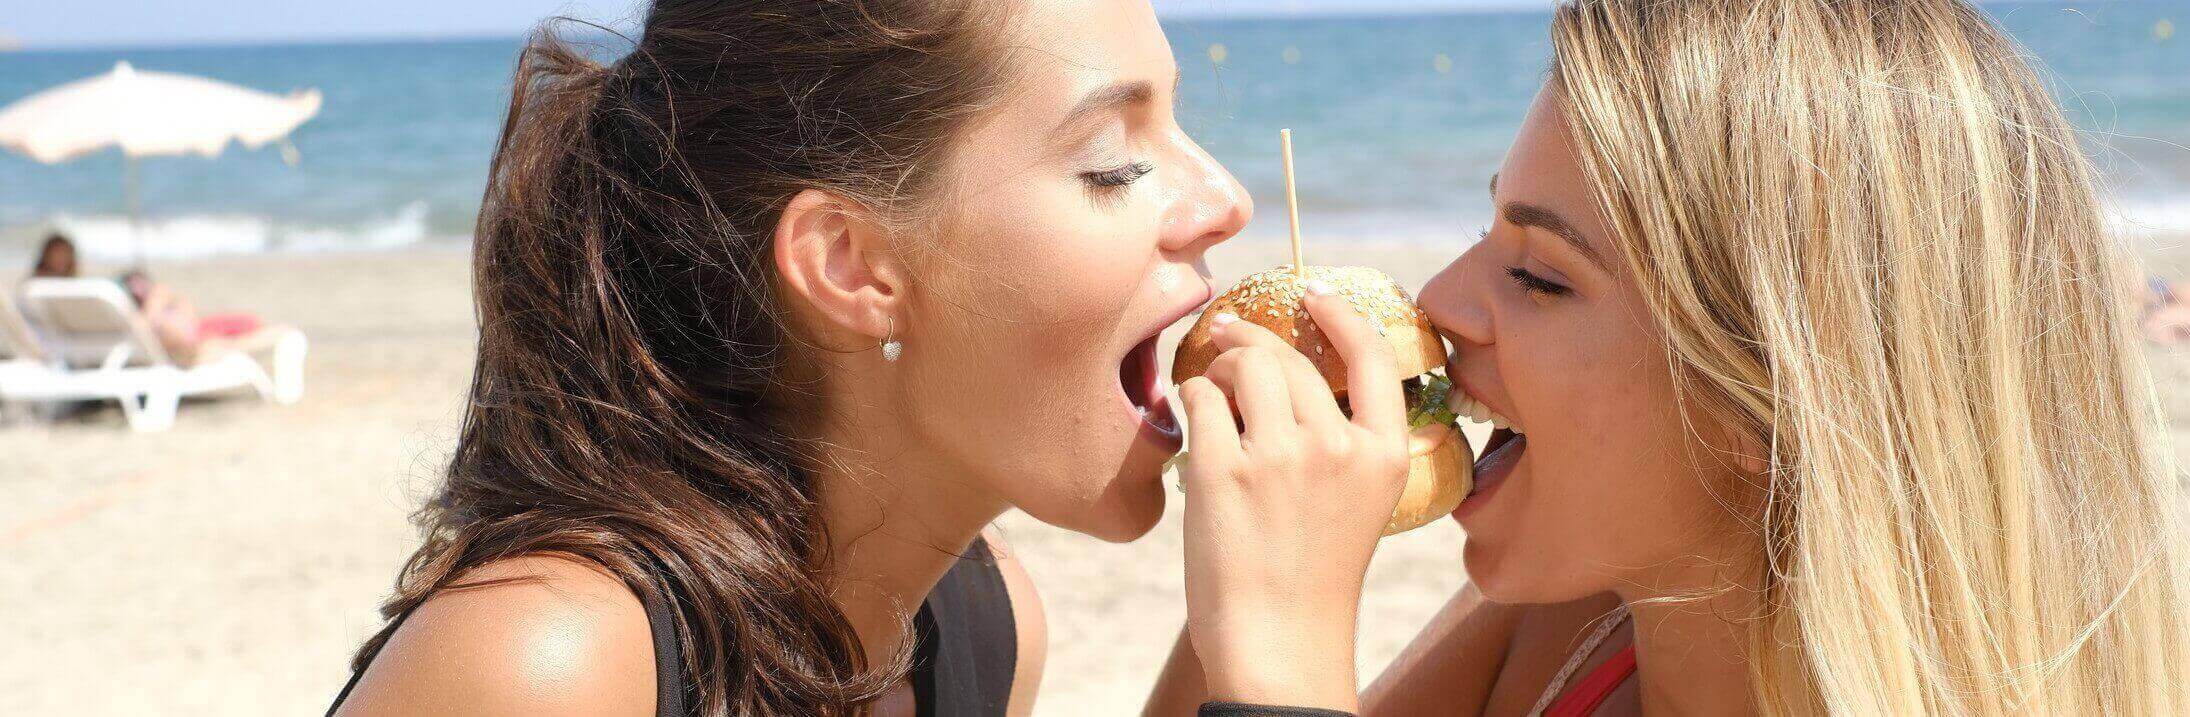 girls-burgers-food-playa-den-bossa-ronis-deli-burger-beach